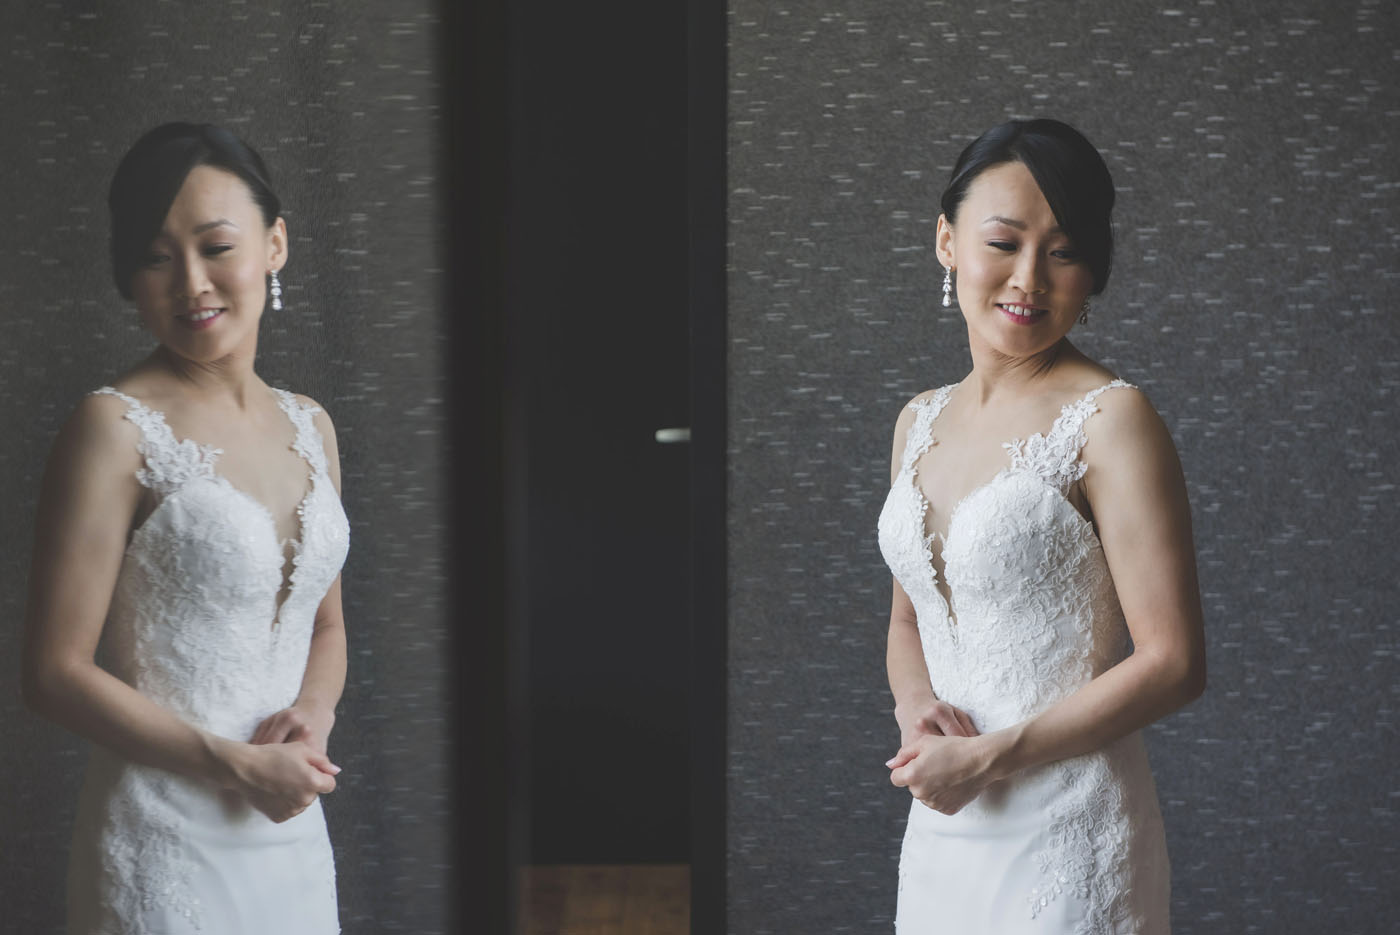 Yuri posing in front of glass window in her wedding dress.